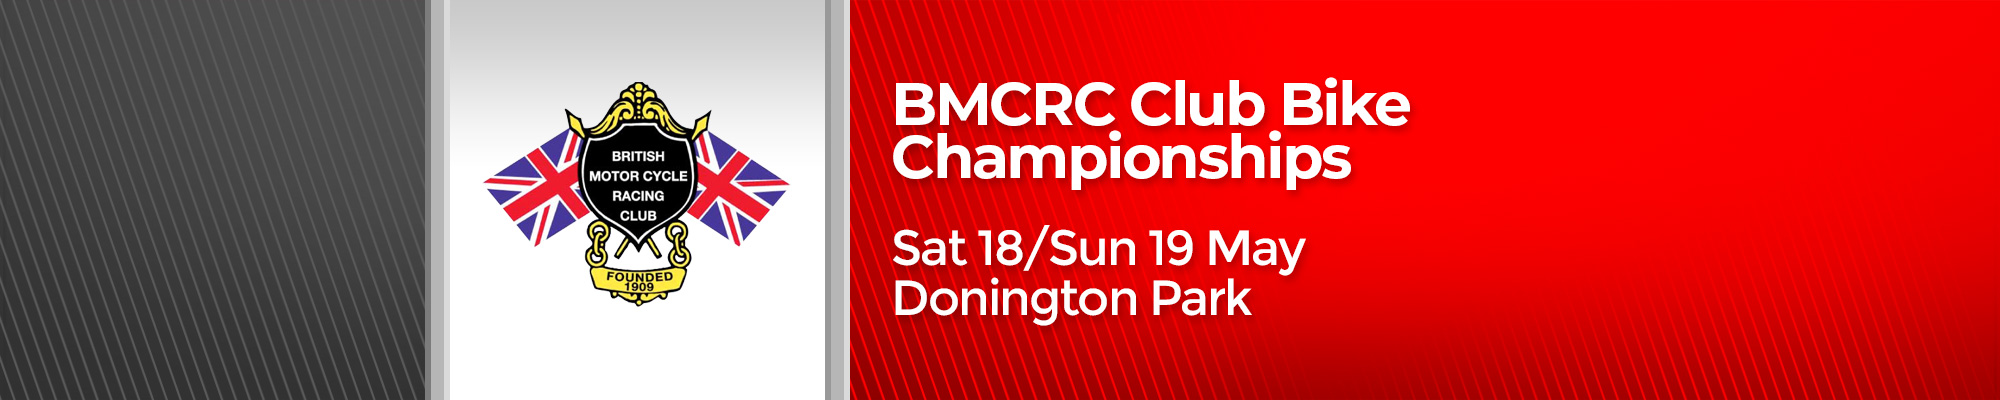 BMCRC Club Bike Championships